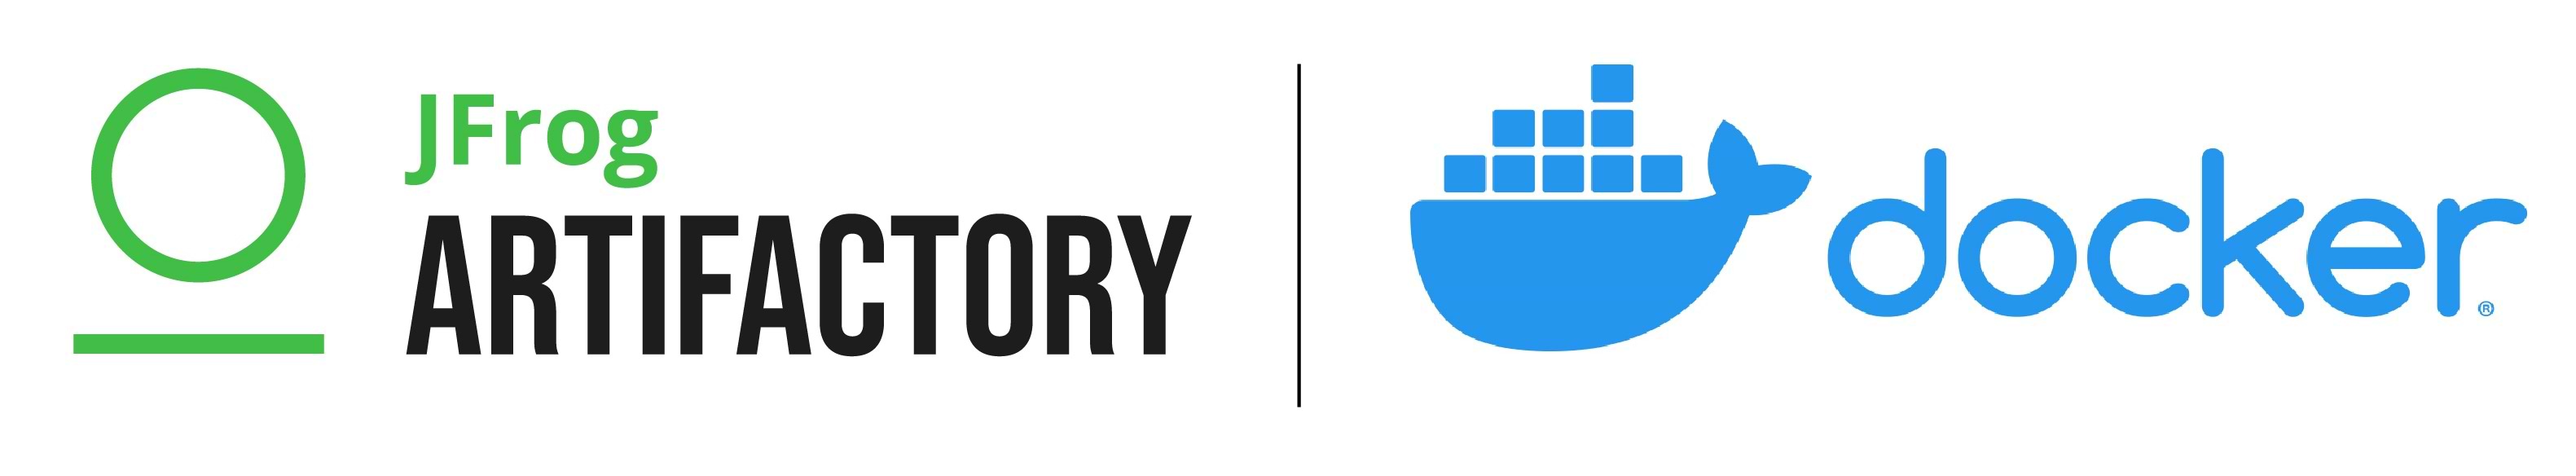 JFrog Artifactory+Docker